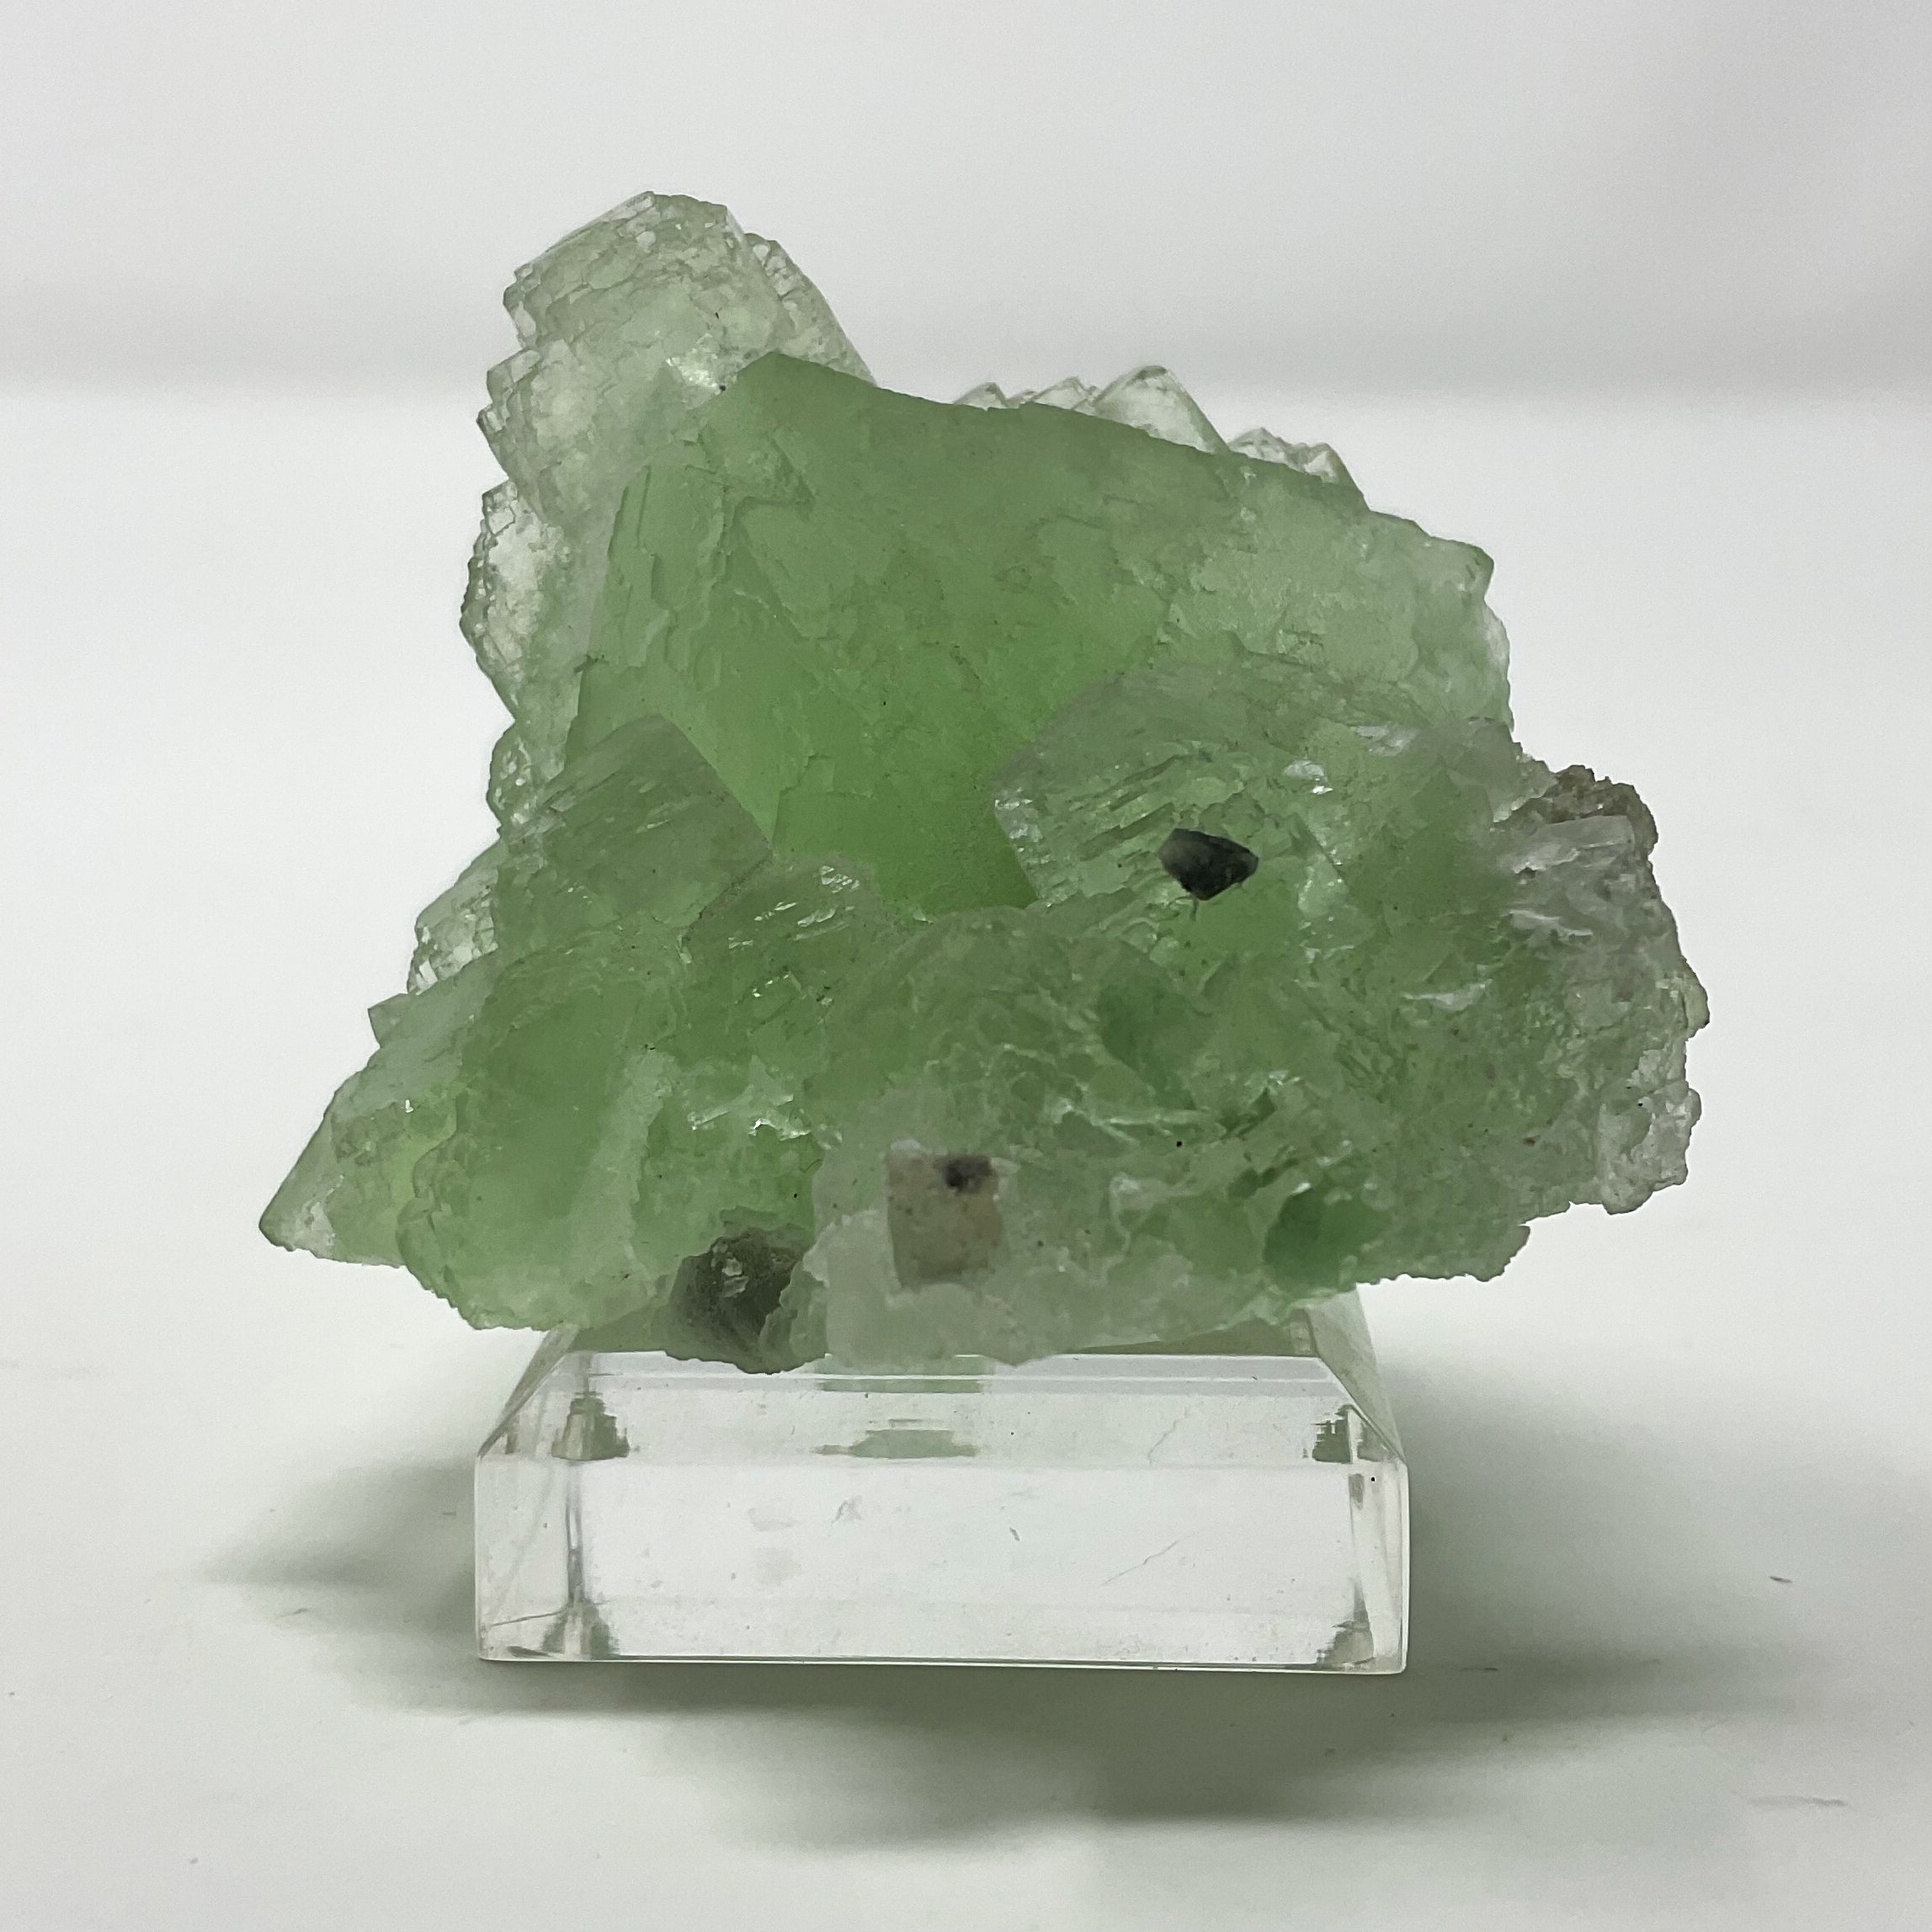 Green Fluorite from the Xiang Huapu Mine in Hunan Province, China